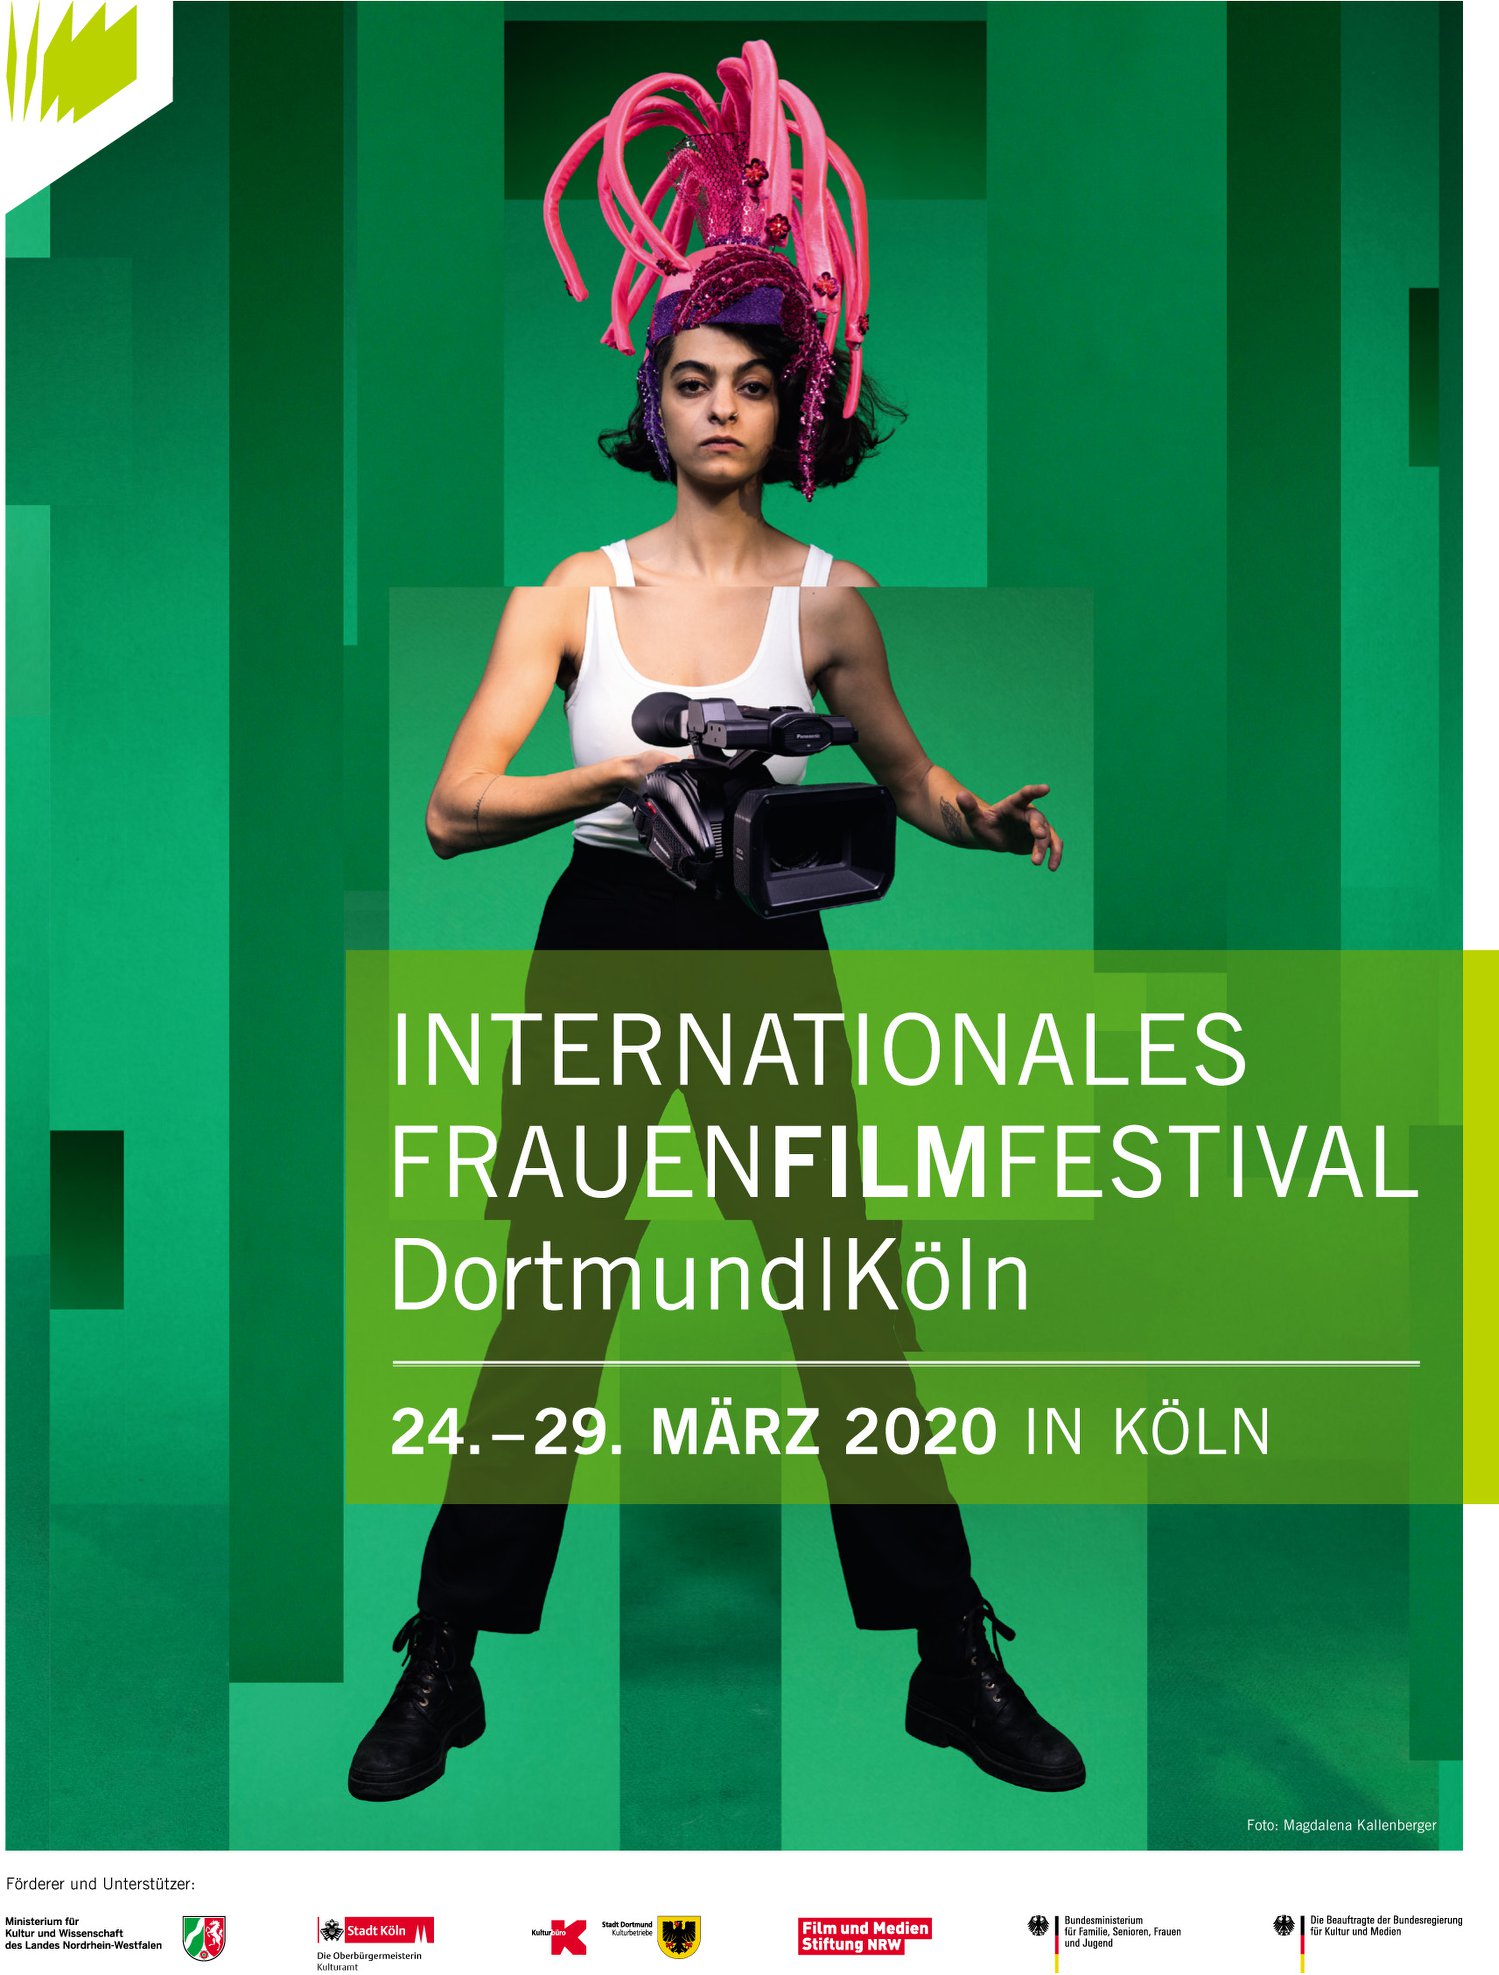 BOOM from Leyla Rodriguez @ the Köln 24.–29. März 2020 Internationales Frauenfilmfestival Dortmund|Köln